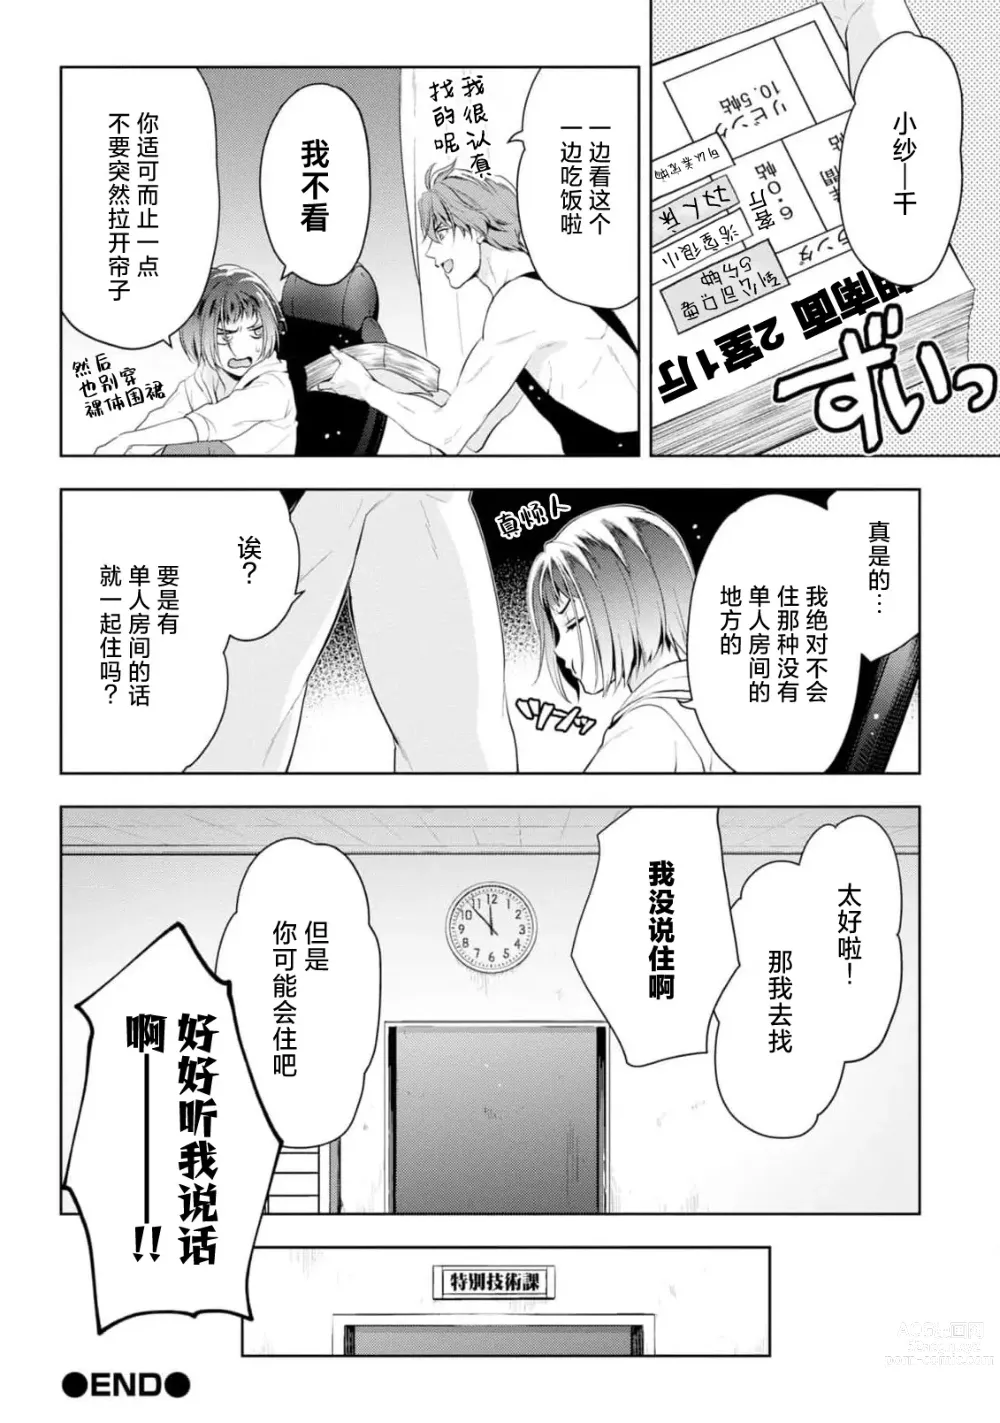 Page 139 of manga 消极小姐和乐观先生~触摸上司的那个并进行反击!?~ 1-5 + Extra